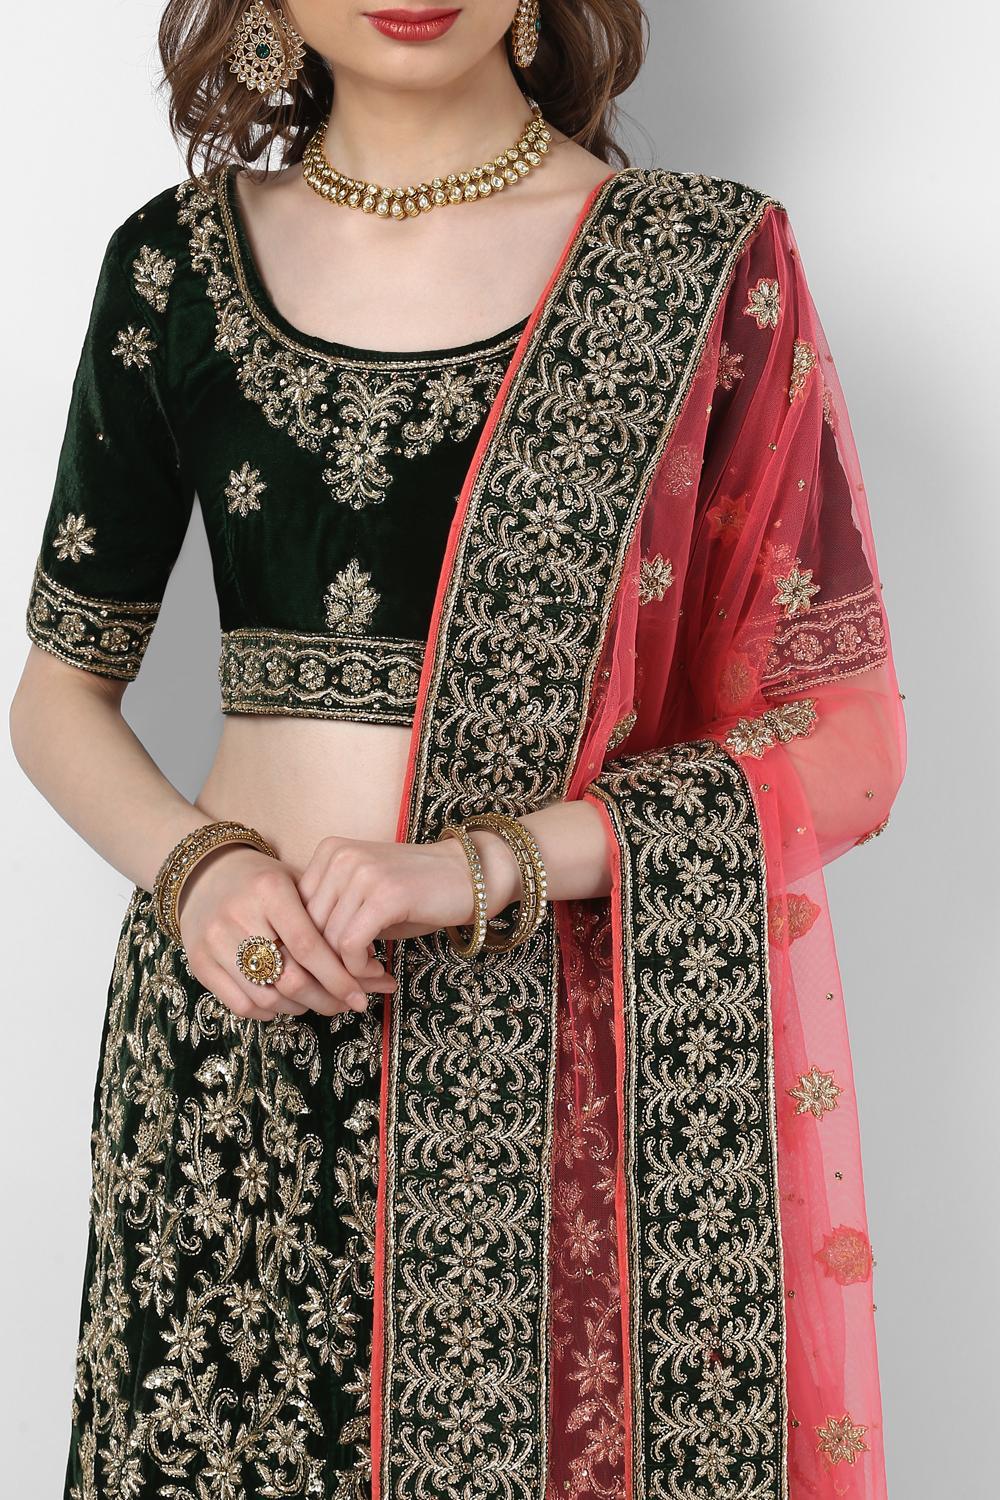 Rental Dress only ₹1,000 | Bridal Rental Dress Shop in Jaipur | Dresszilla  - YouTube